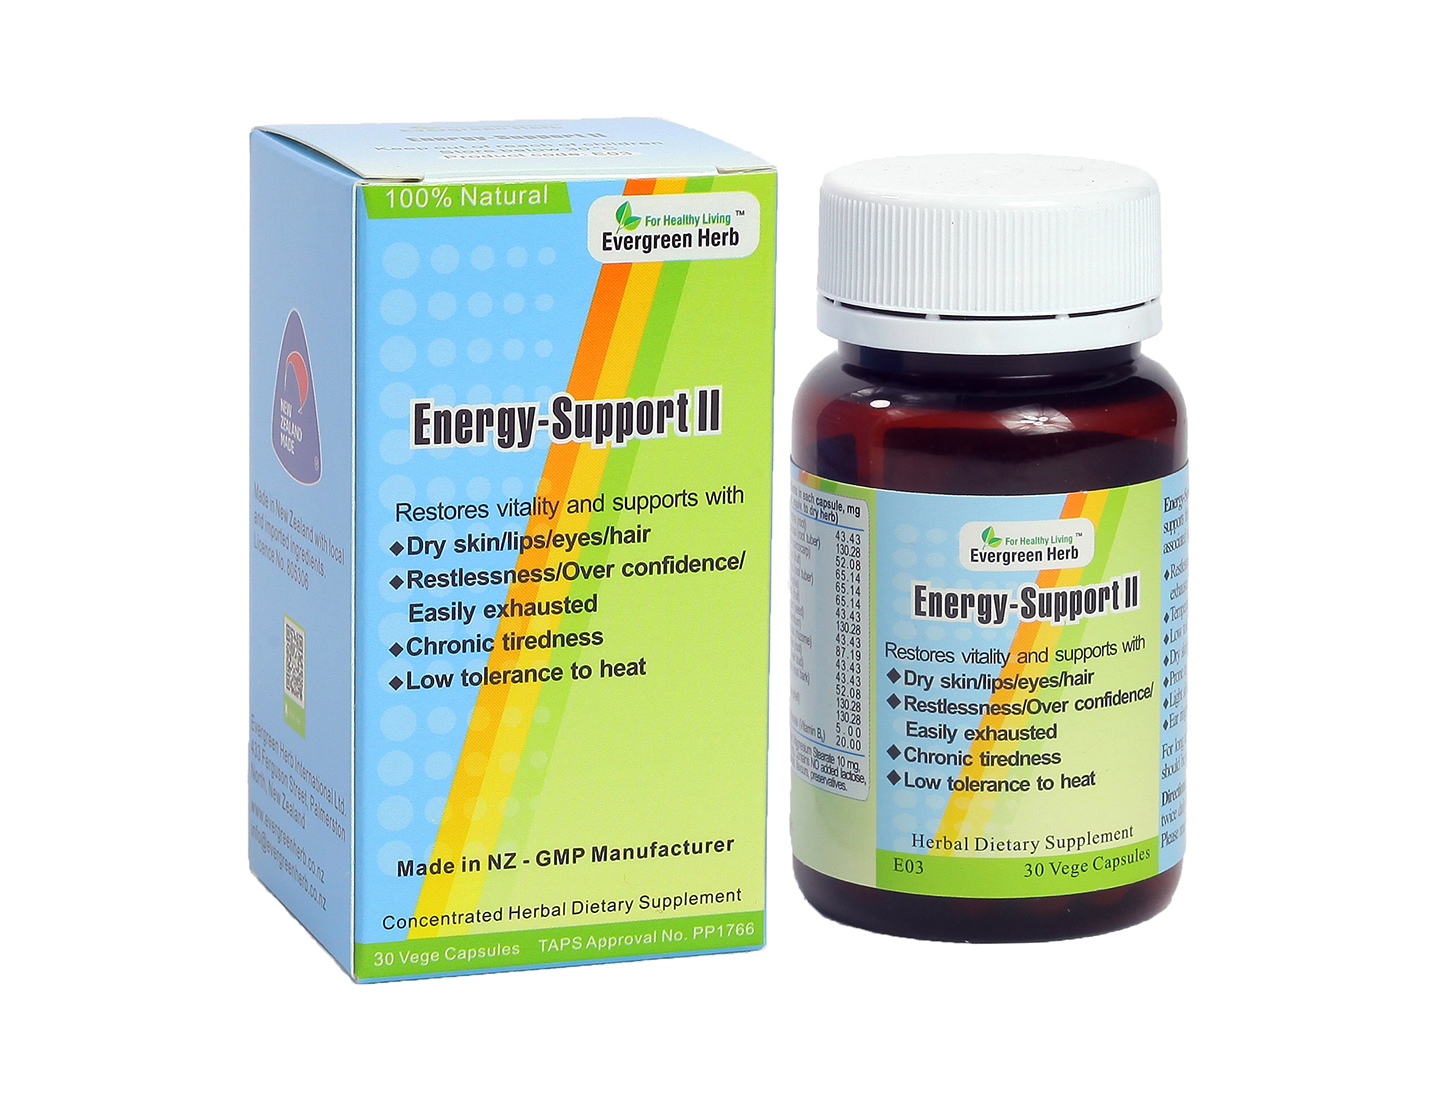 energy-support-ii-bottle-evergreen-herb-new-zealand